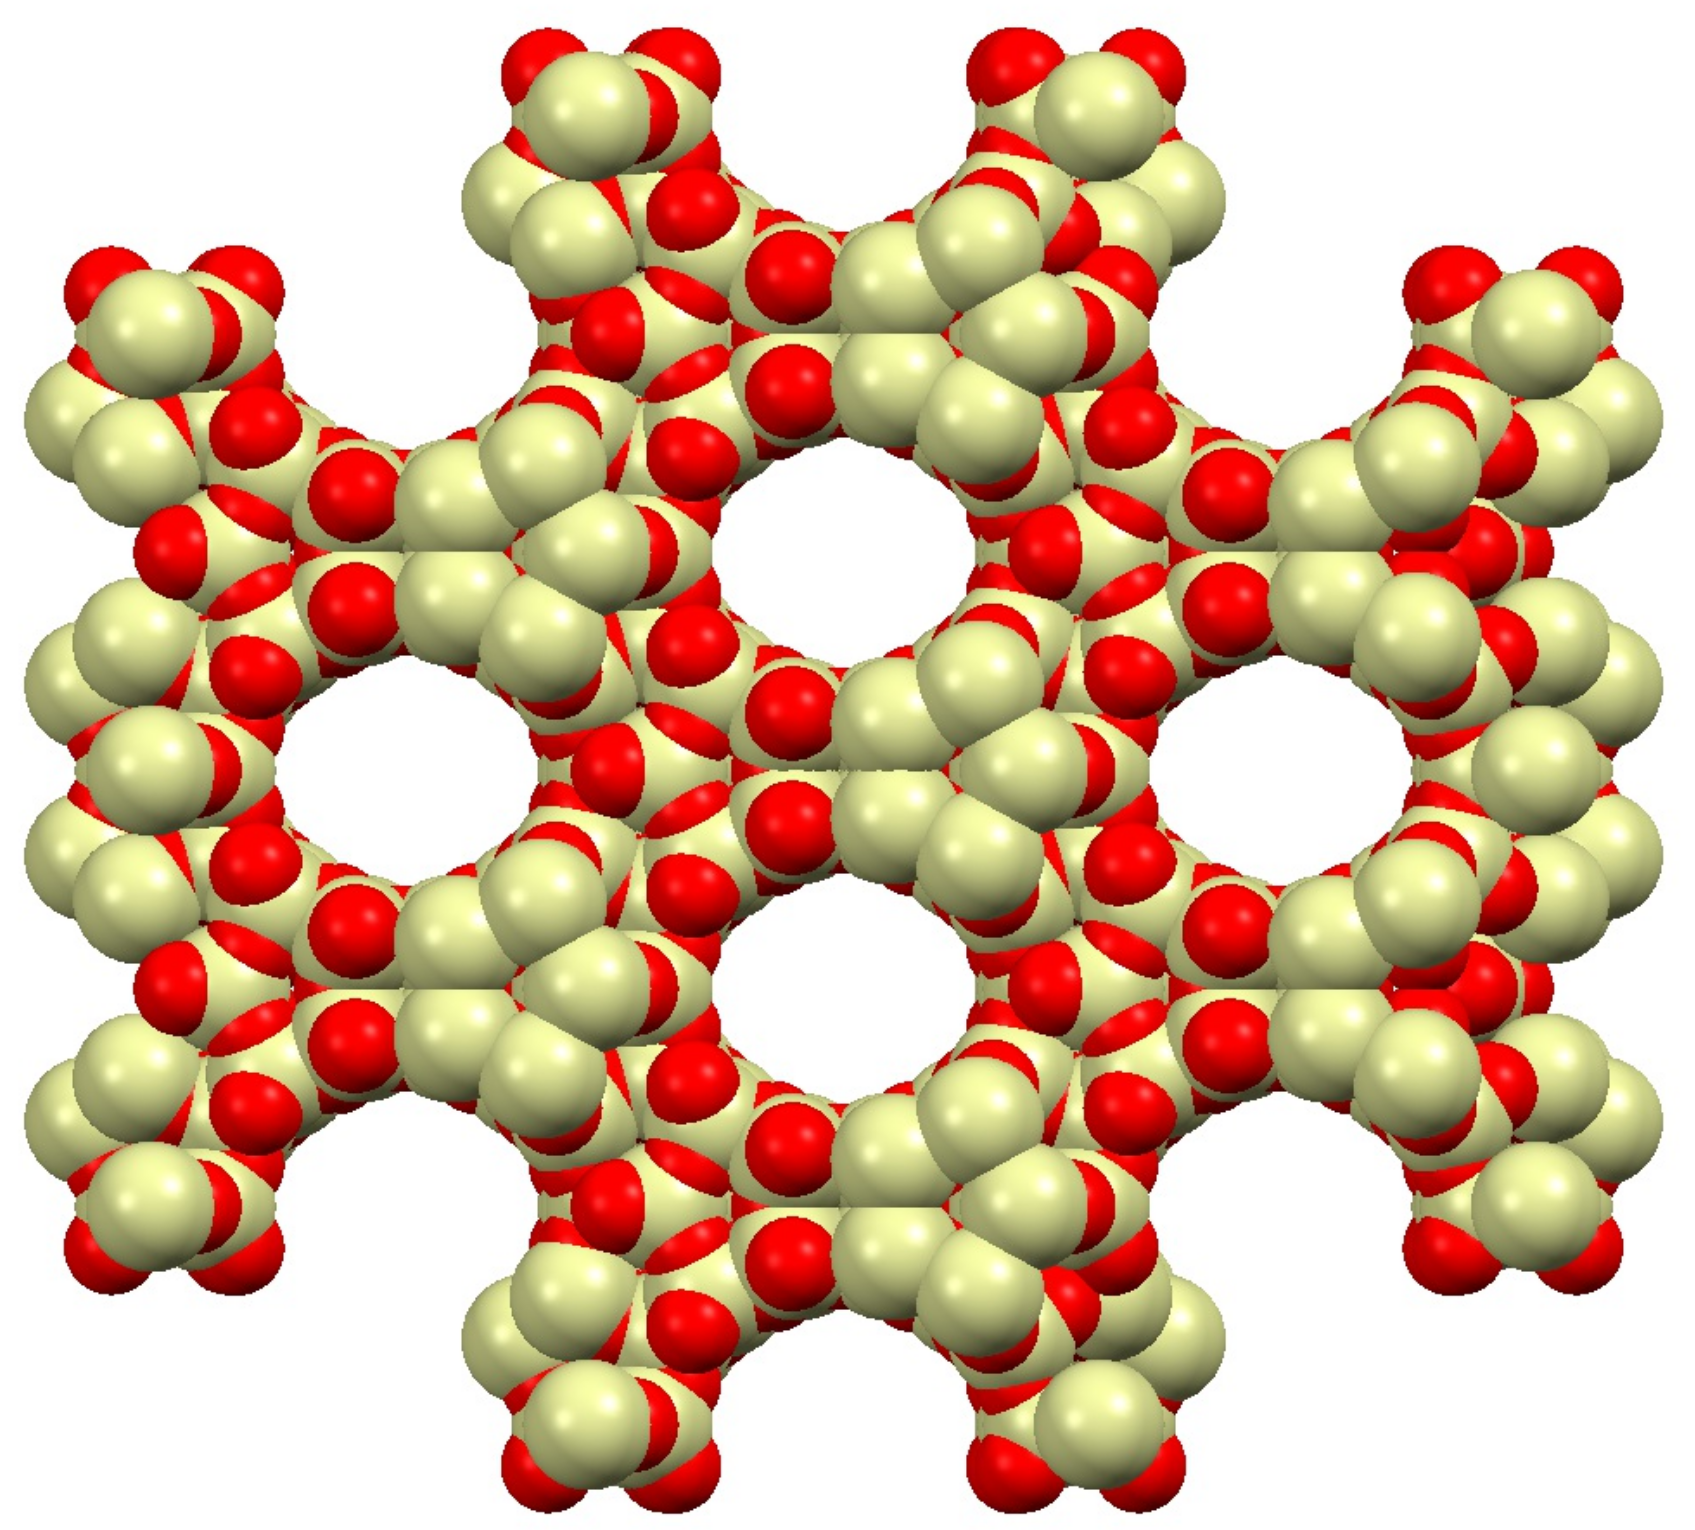 Кристаллическое ядро. Структура цеолита ZSM-5. Кристаллическая решетка цеолита. Цеолит ZSM-5. Цеолитный катализатор формула.